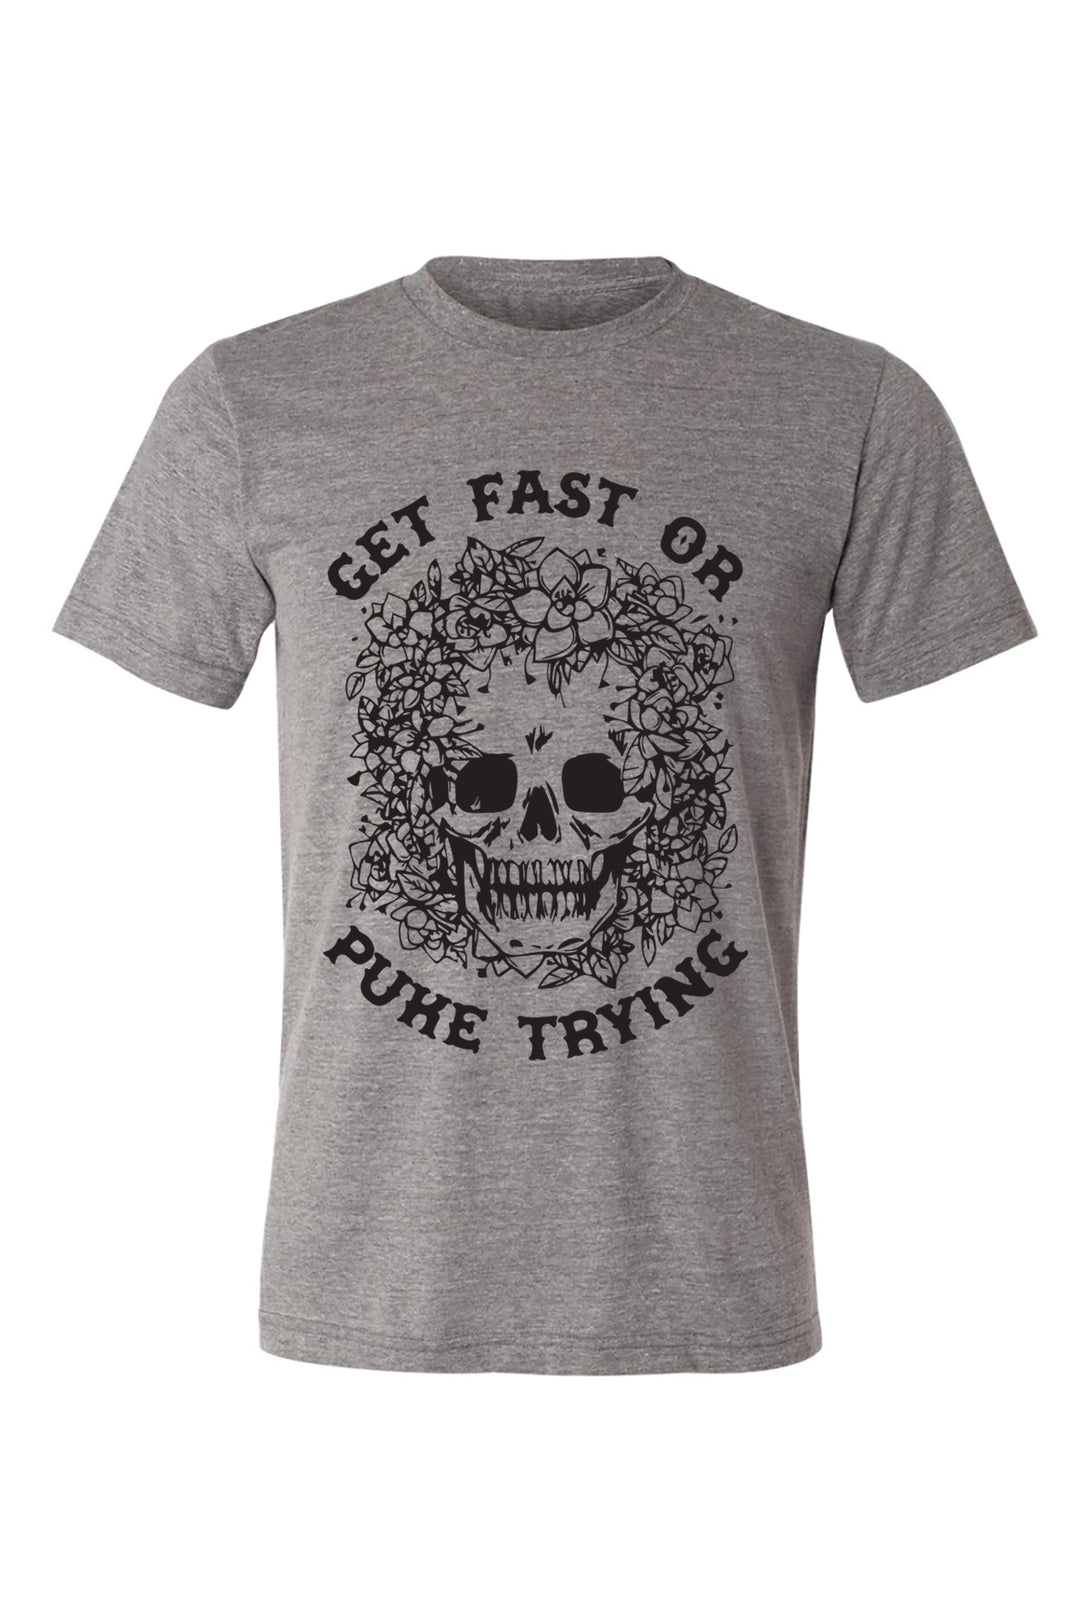 Sarah Marie Design Studio Get Fast or Puke Trying T-Shirt